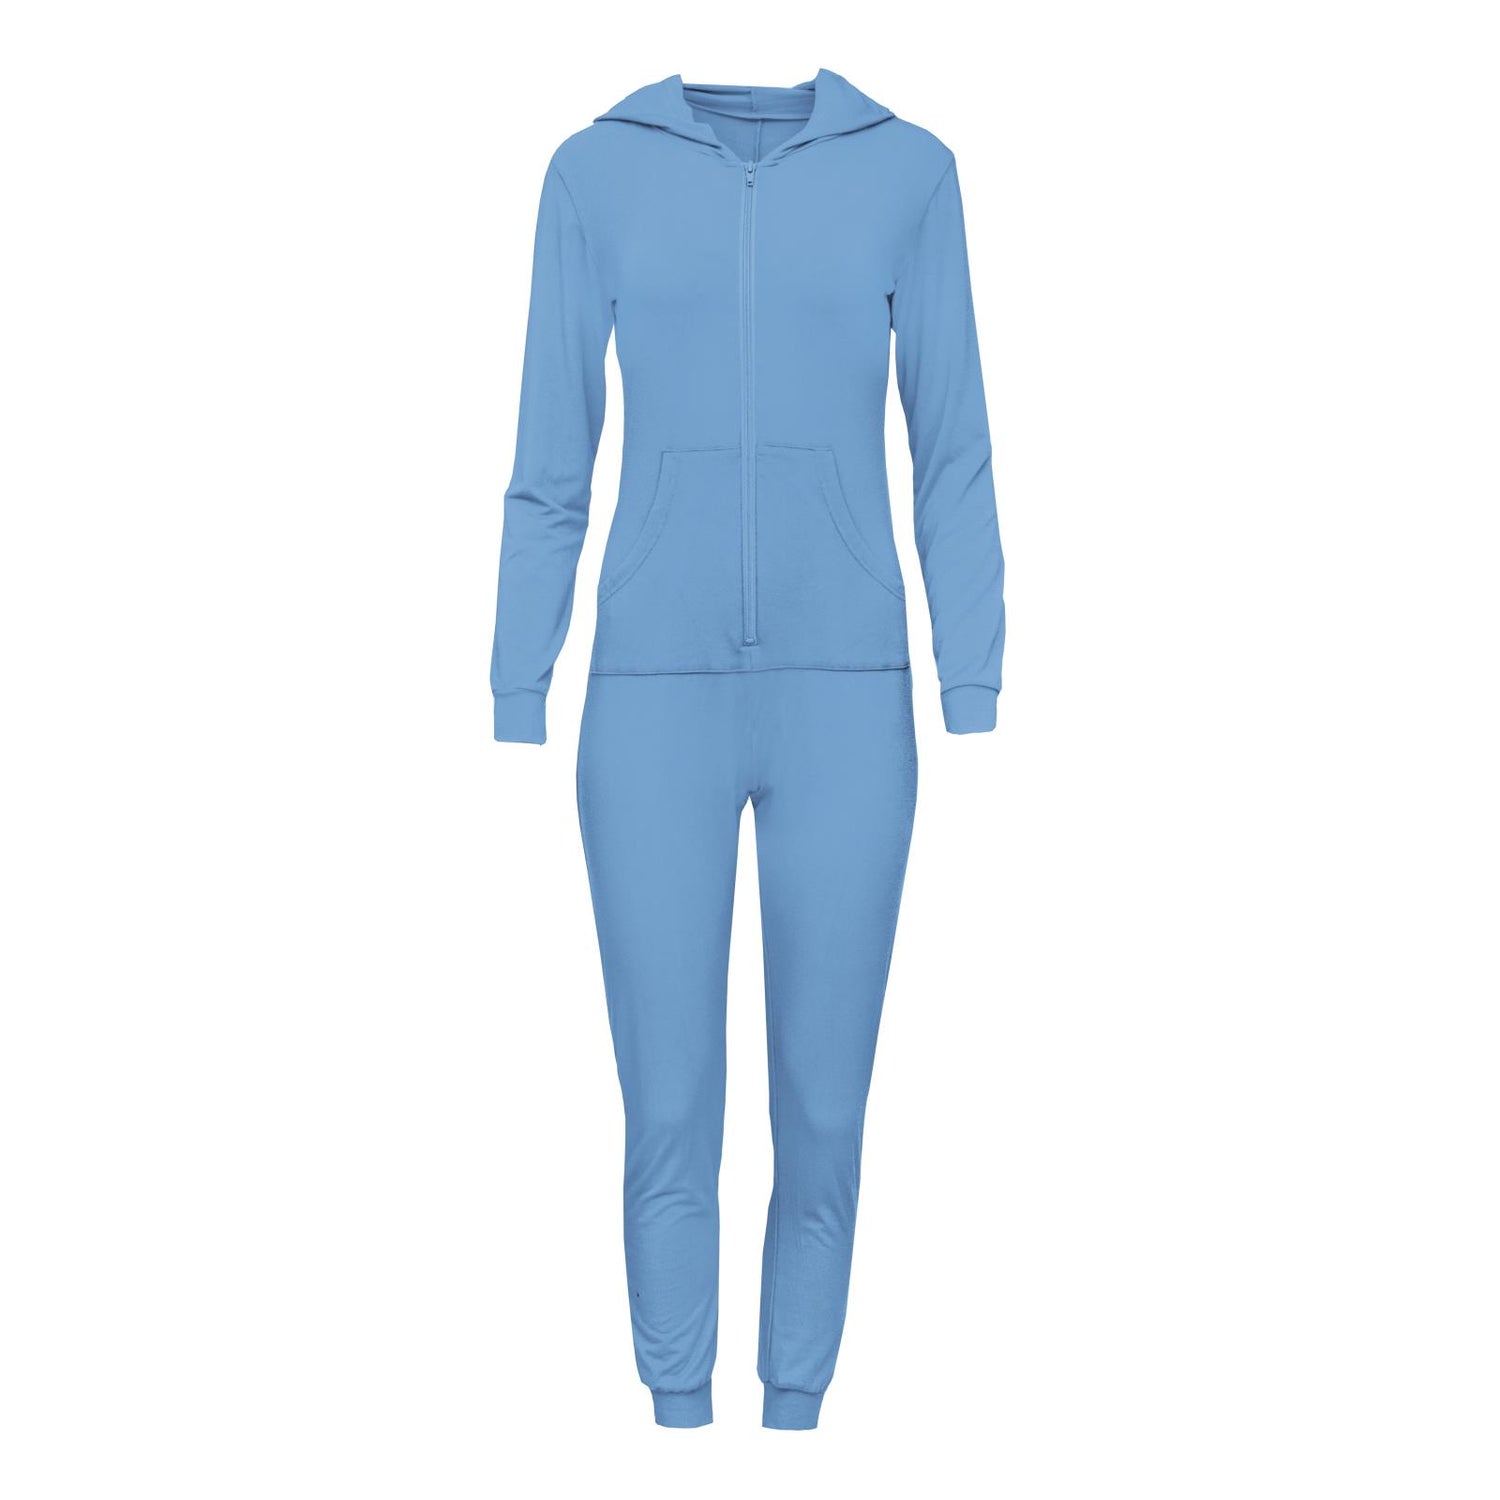 Women's Long Sleeve Jumpsuit with Hood in Dream Blue